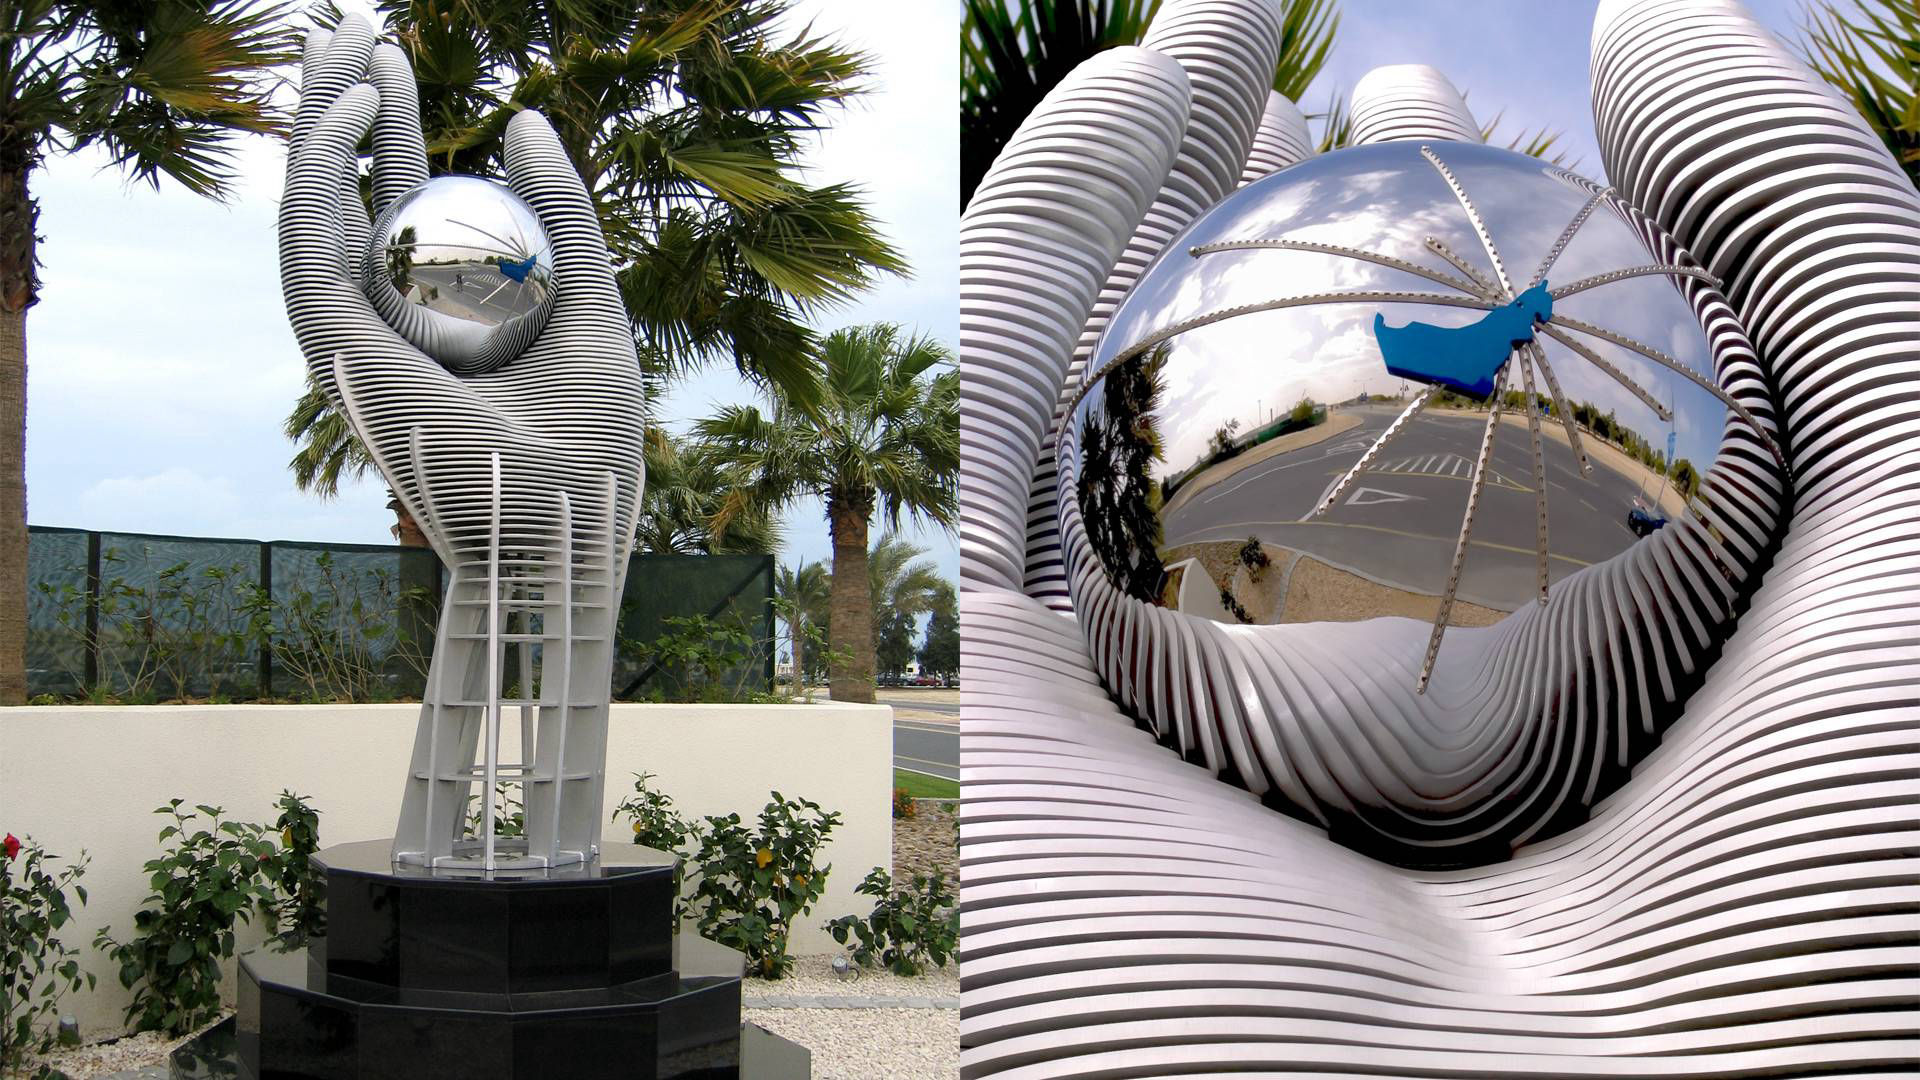 Hand sculpture for Dubai Aluminum, public art sculpture by Heath Satow in Dubai, UAE